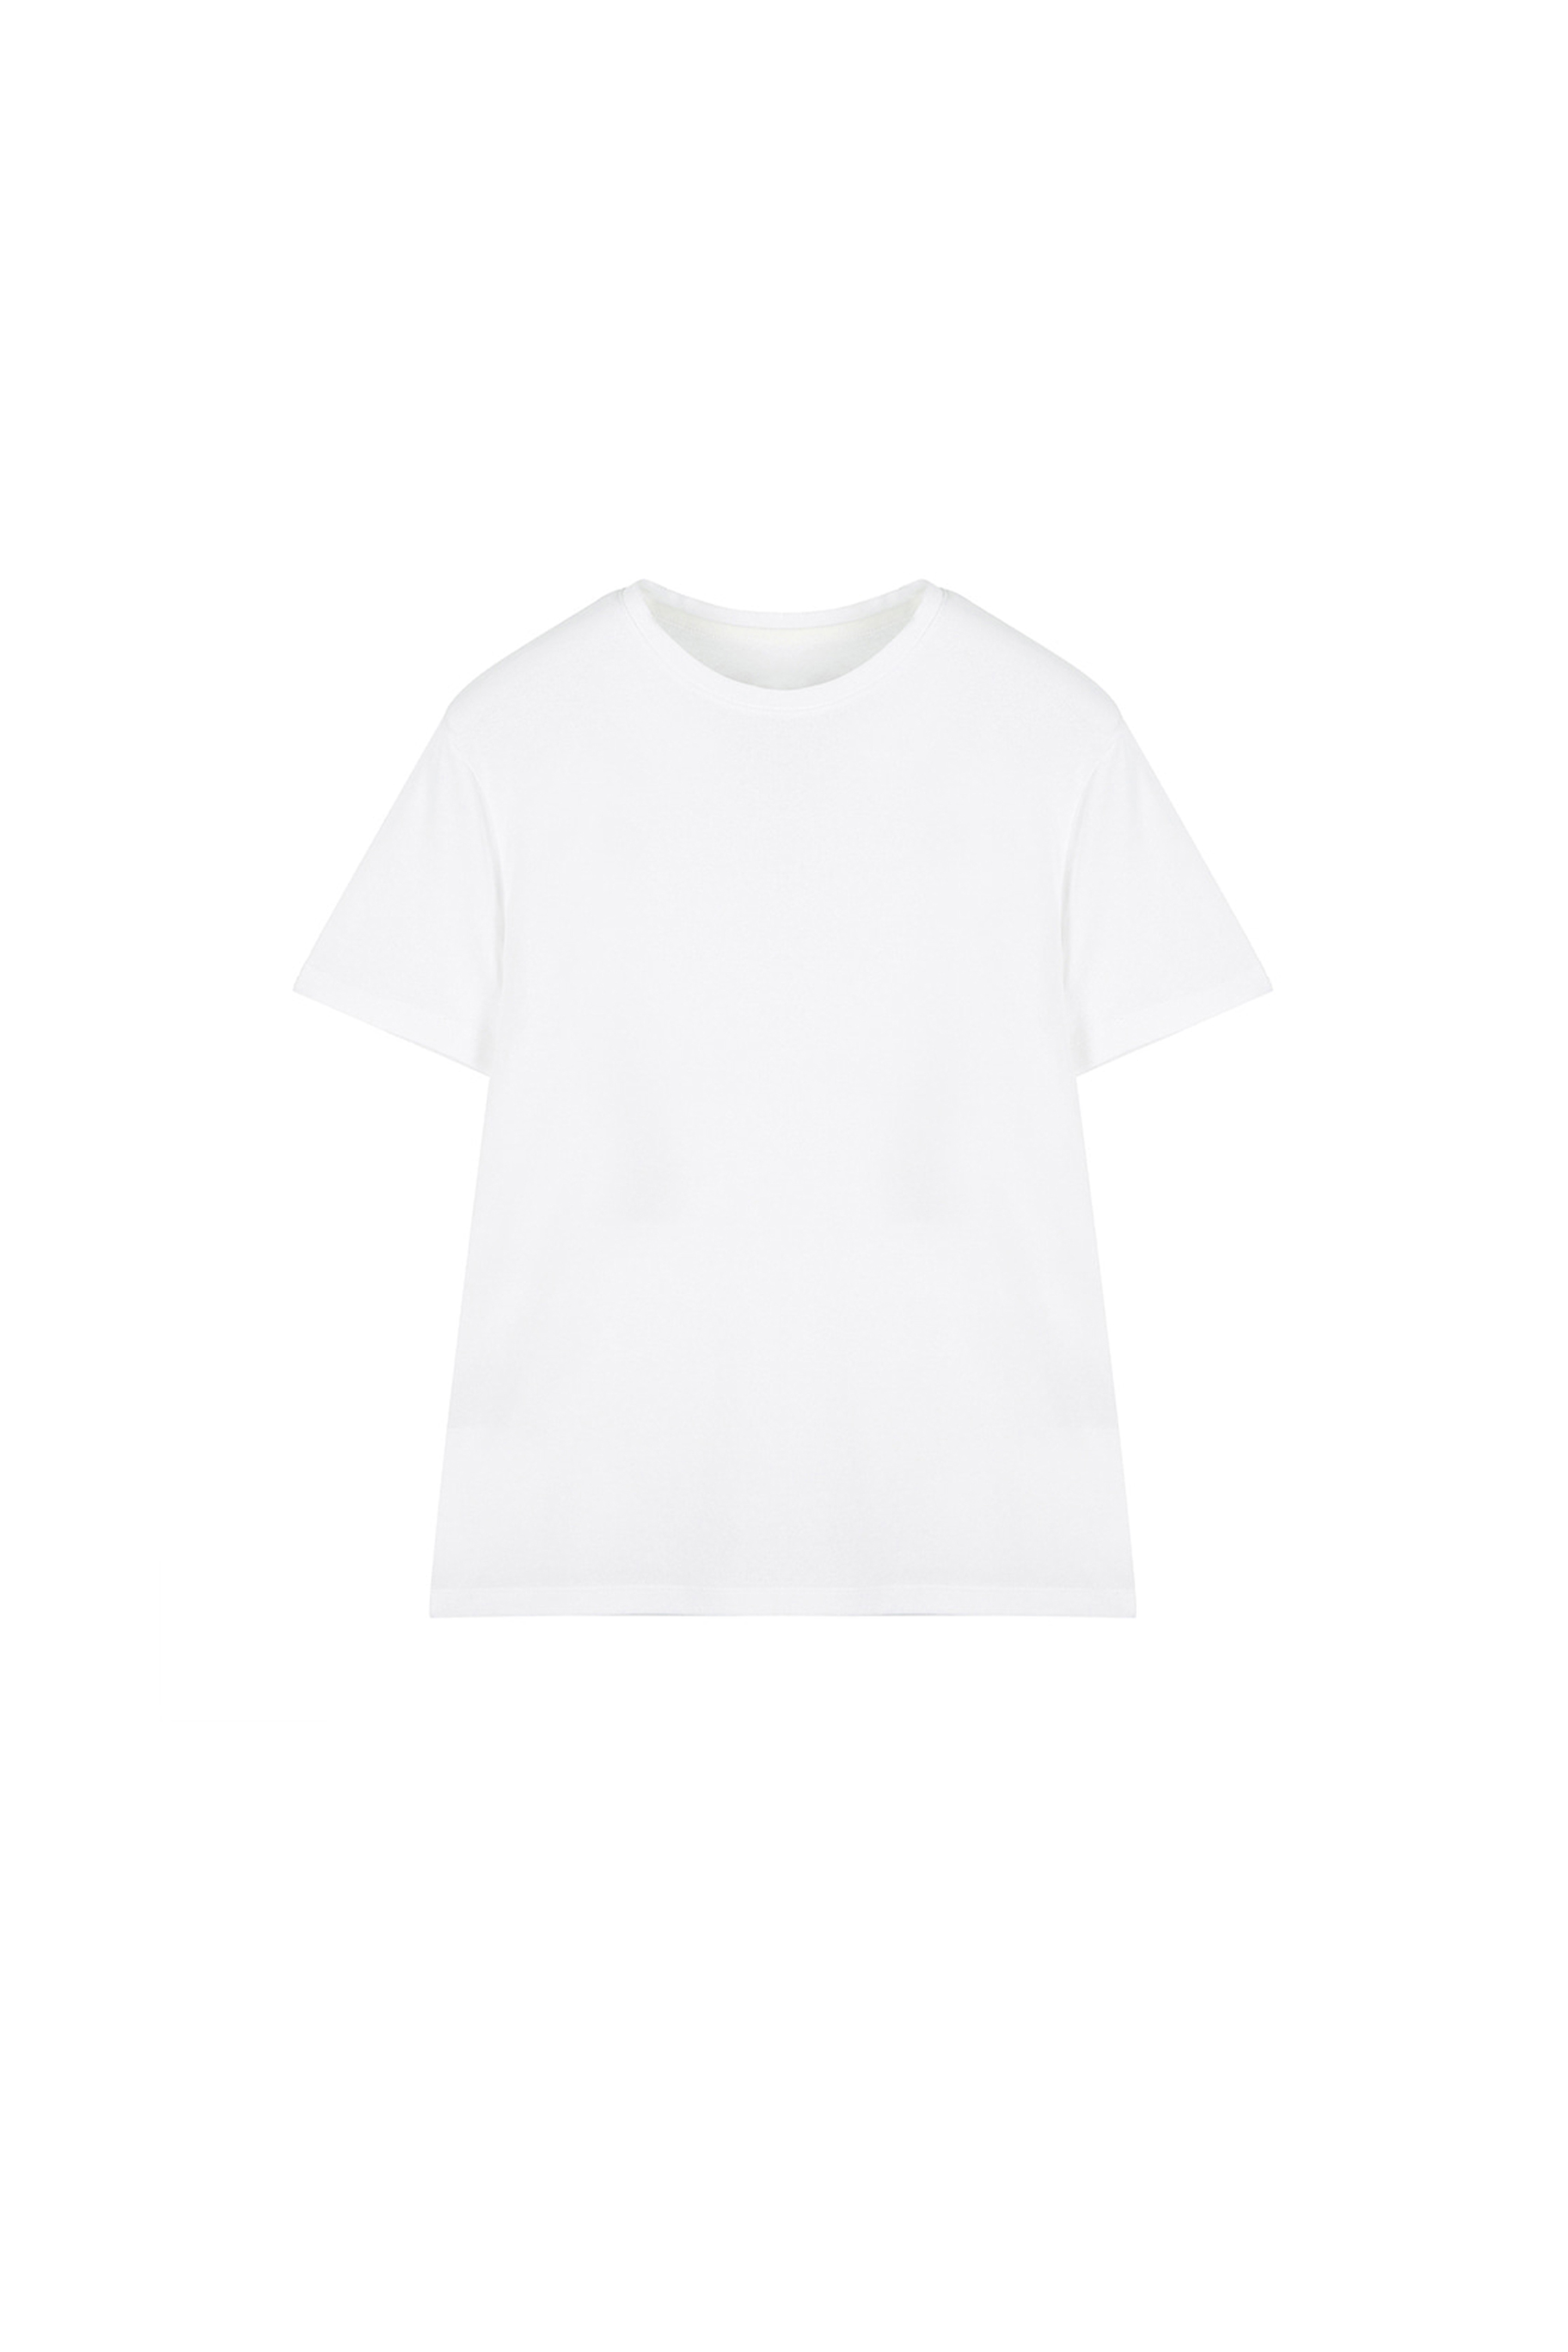 ORE COTTON 002 T-shirt White